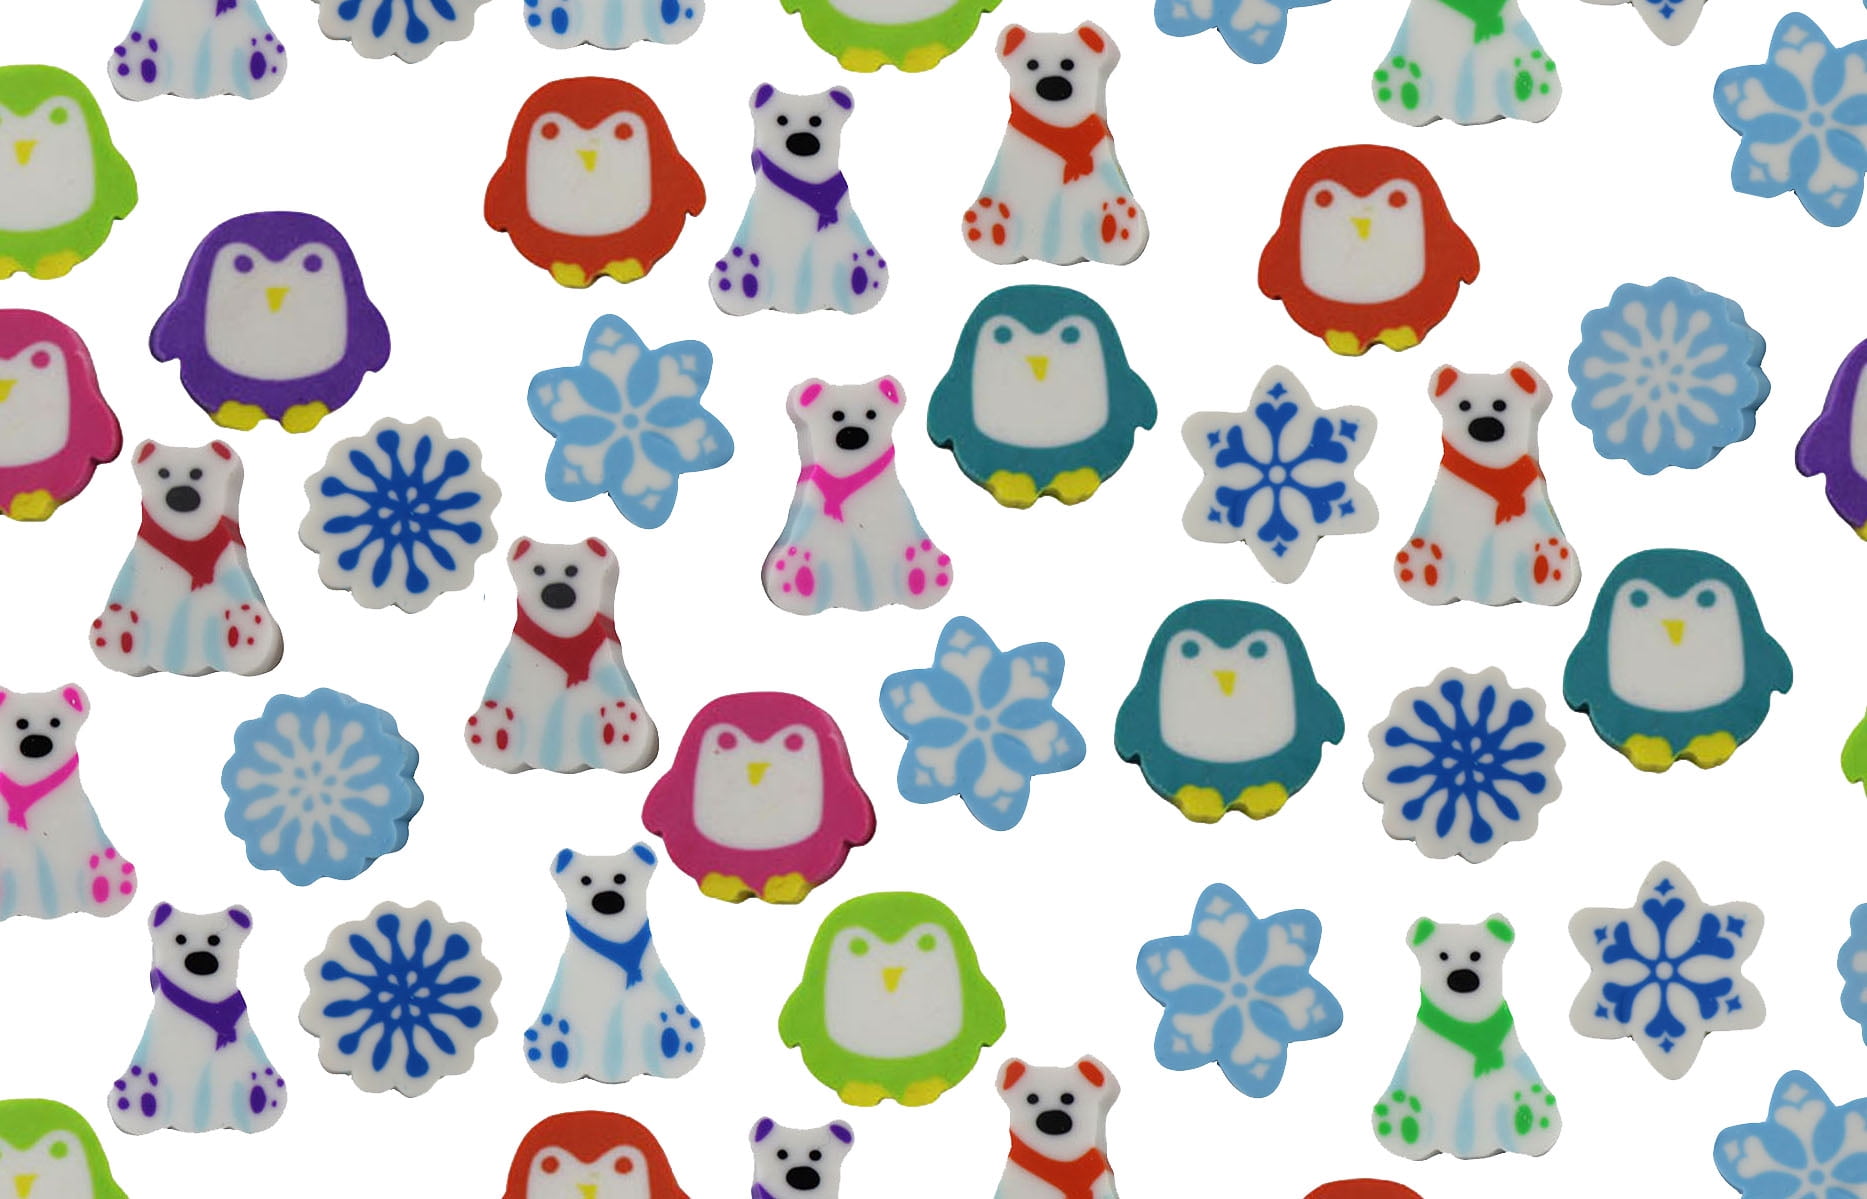 360 Winter Animal Eraser Set - Snowflake, Penguin, Polar Bear Mini